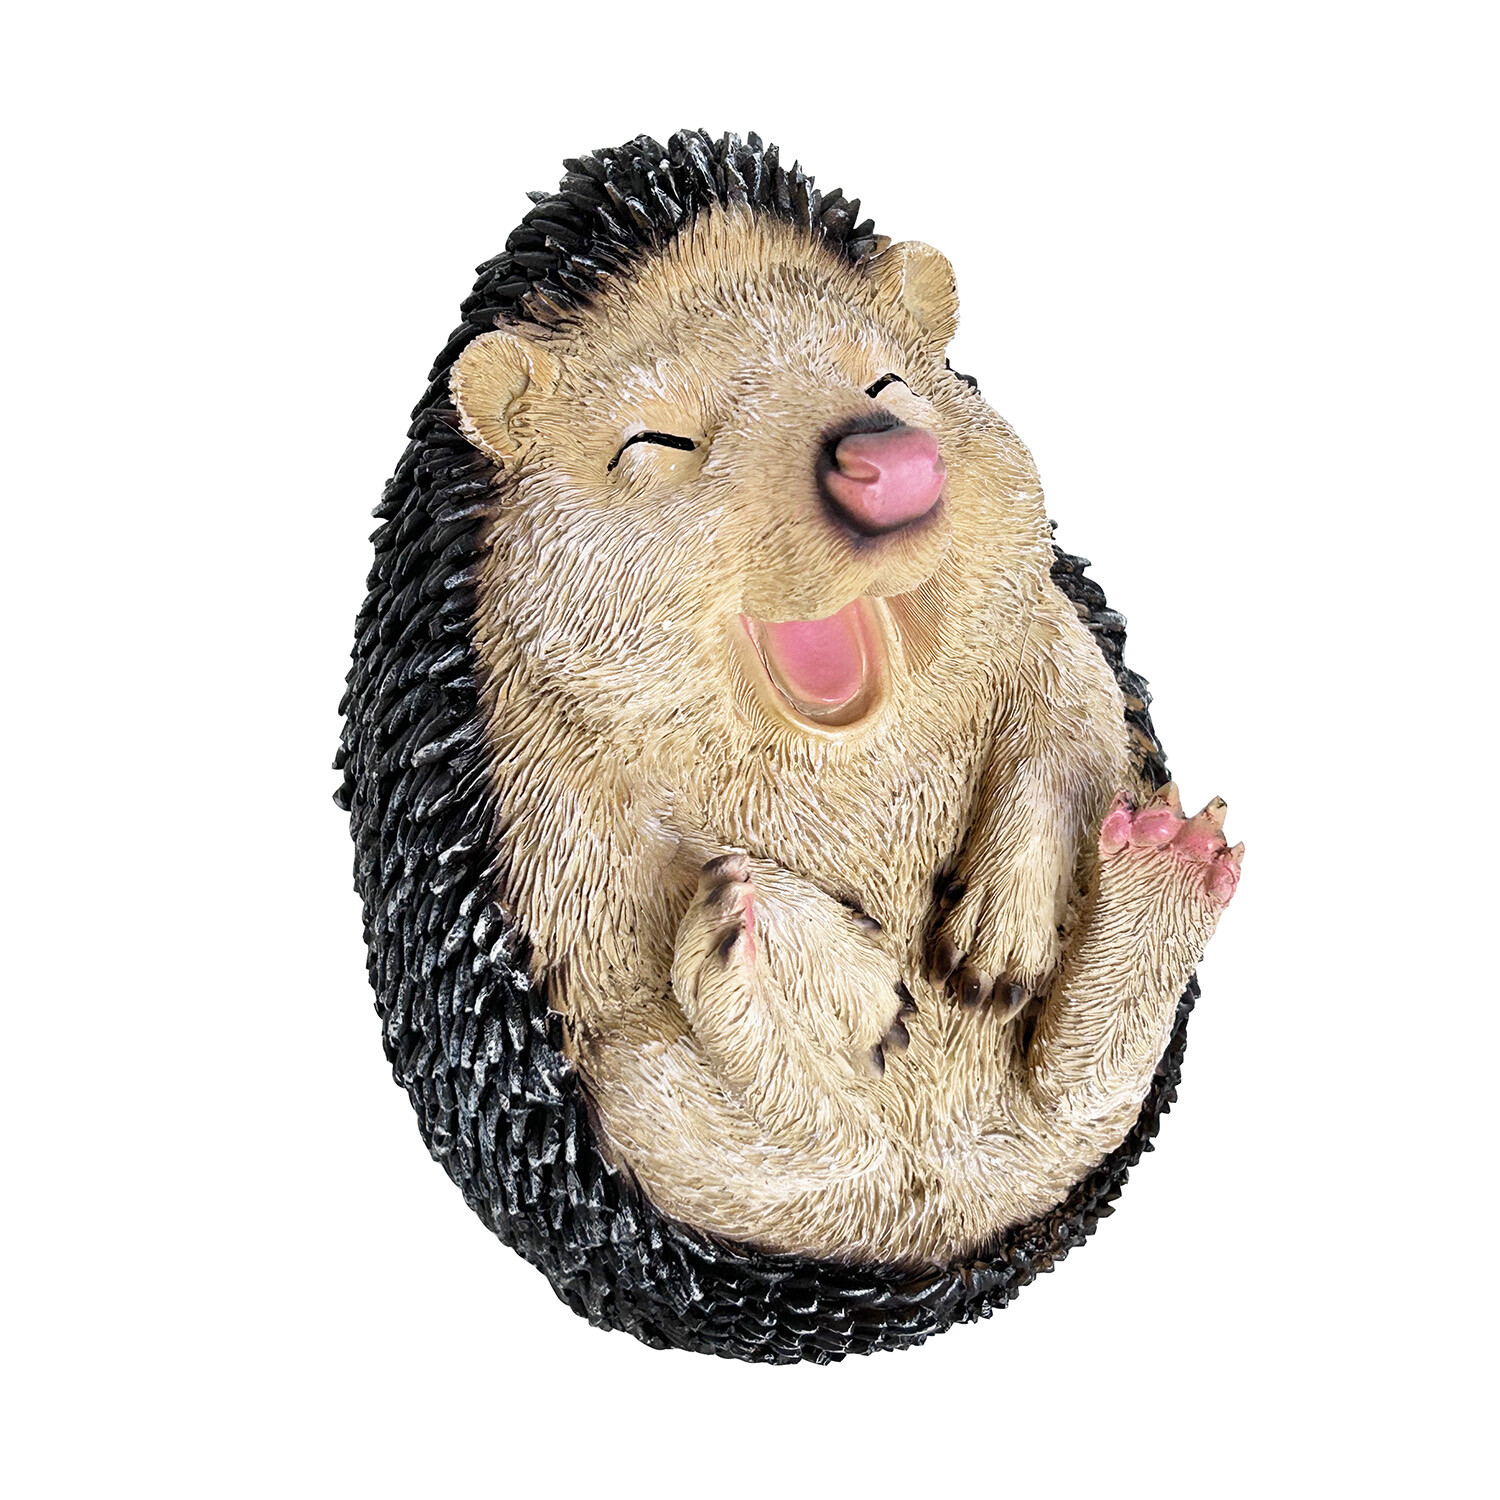 Laughing Hedgehog Ornament Image